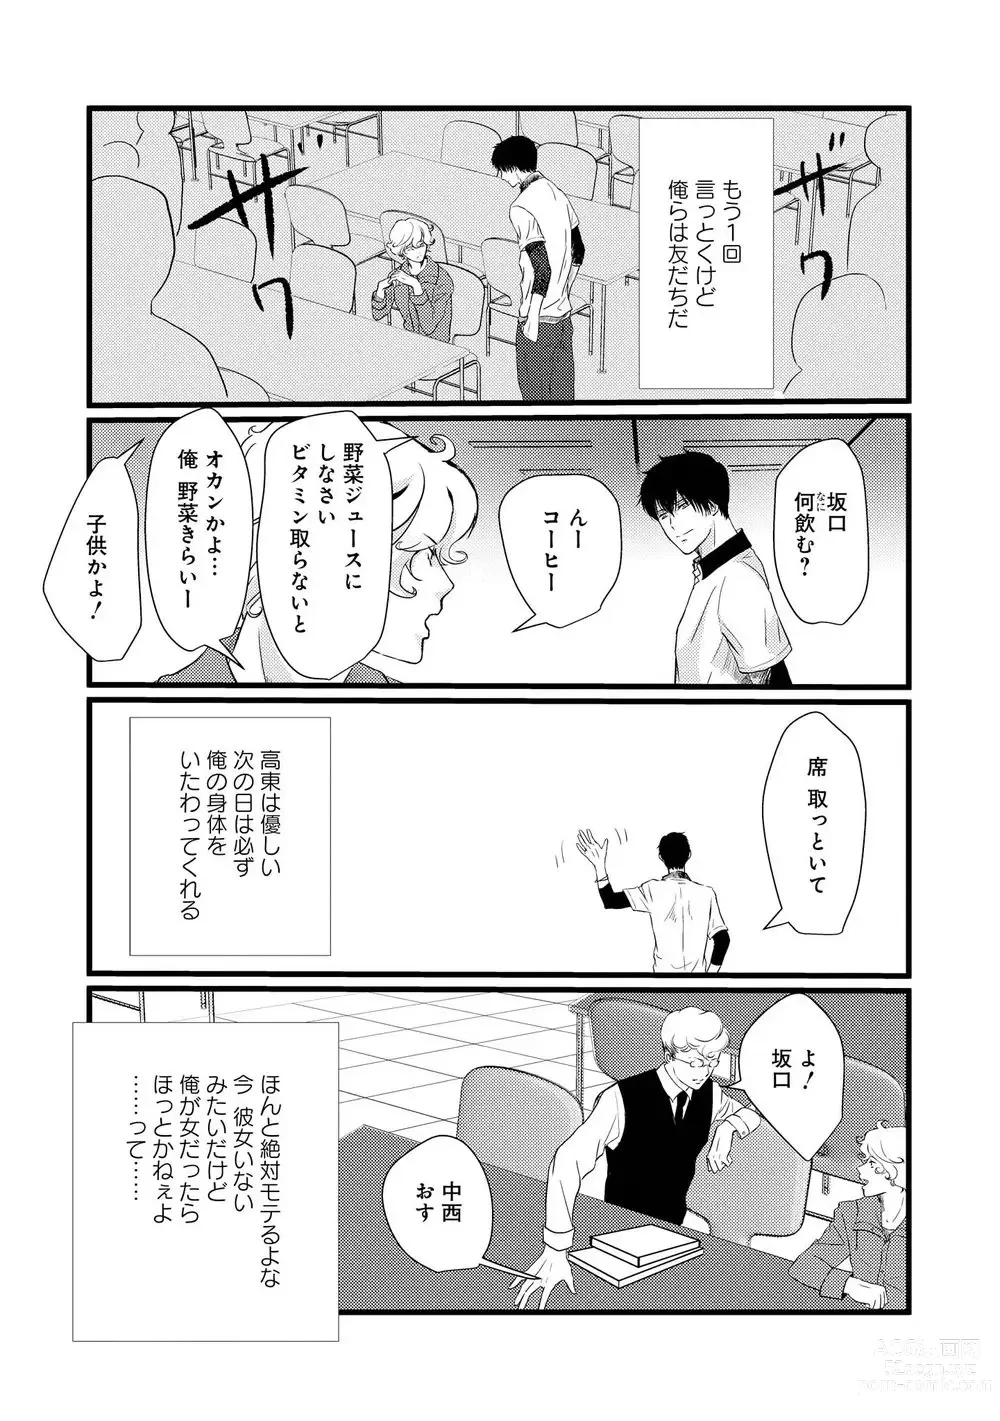 Page 17 of manga AHOERO